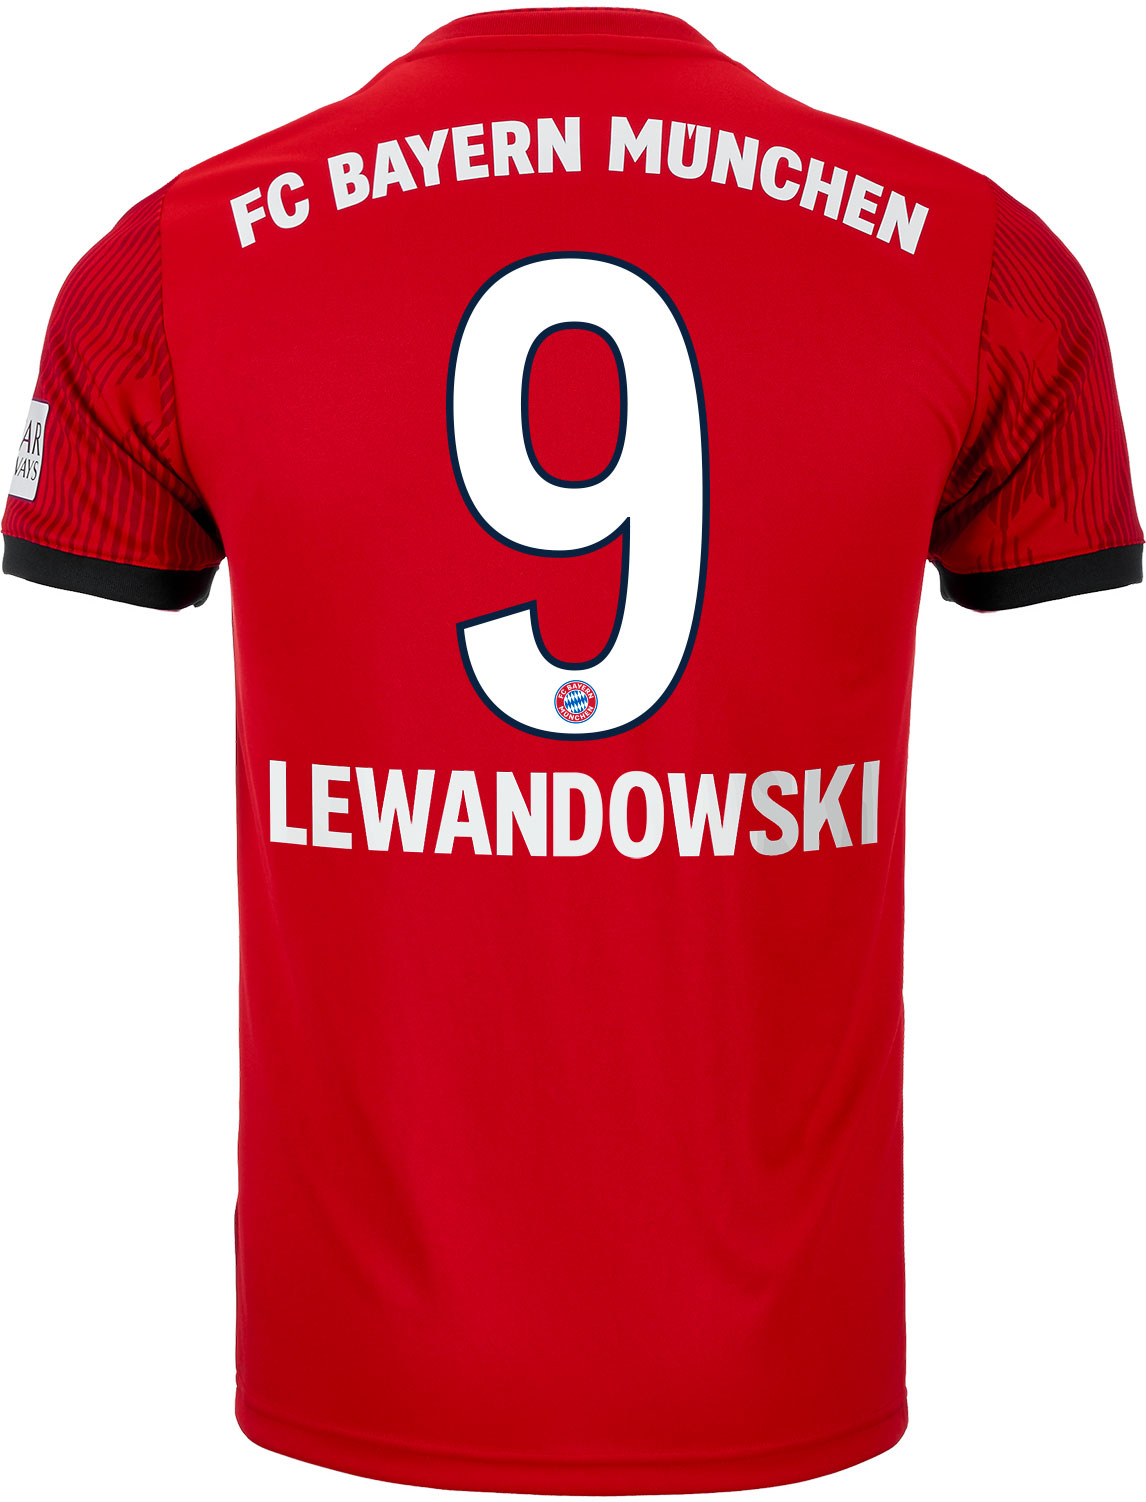 lewandowski jersey youth